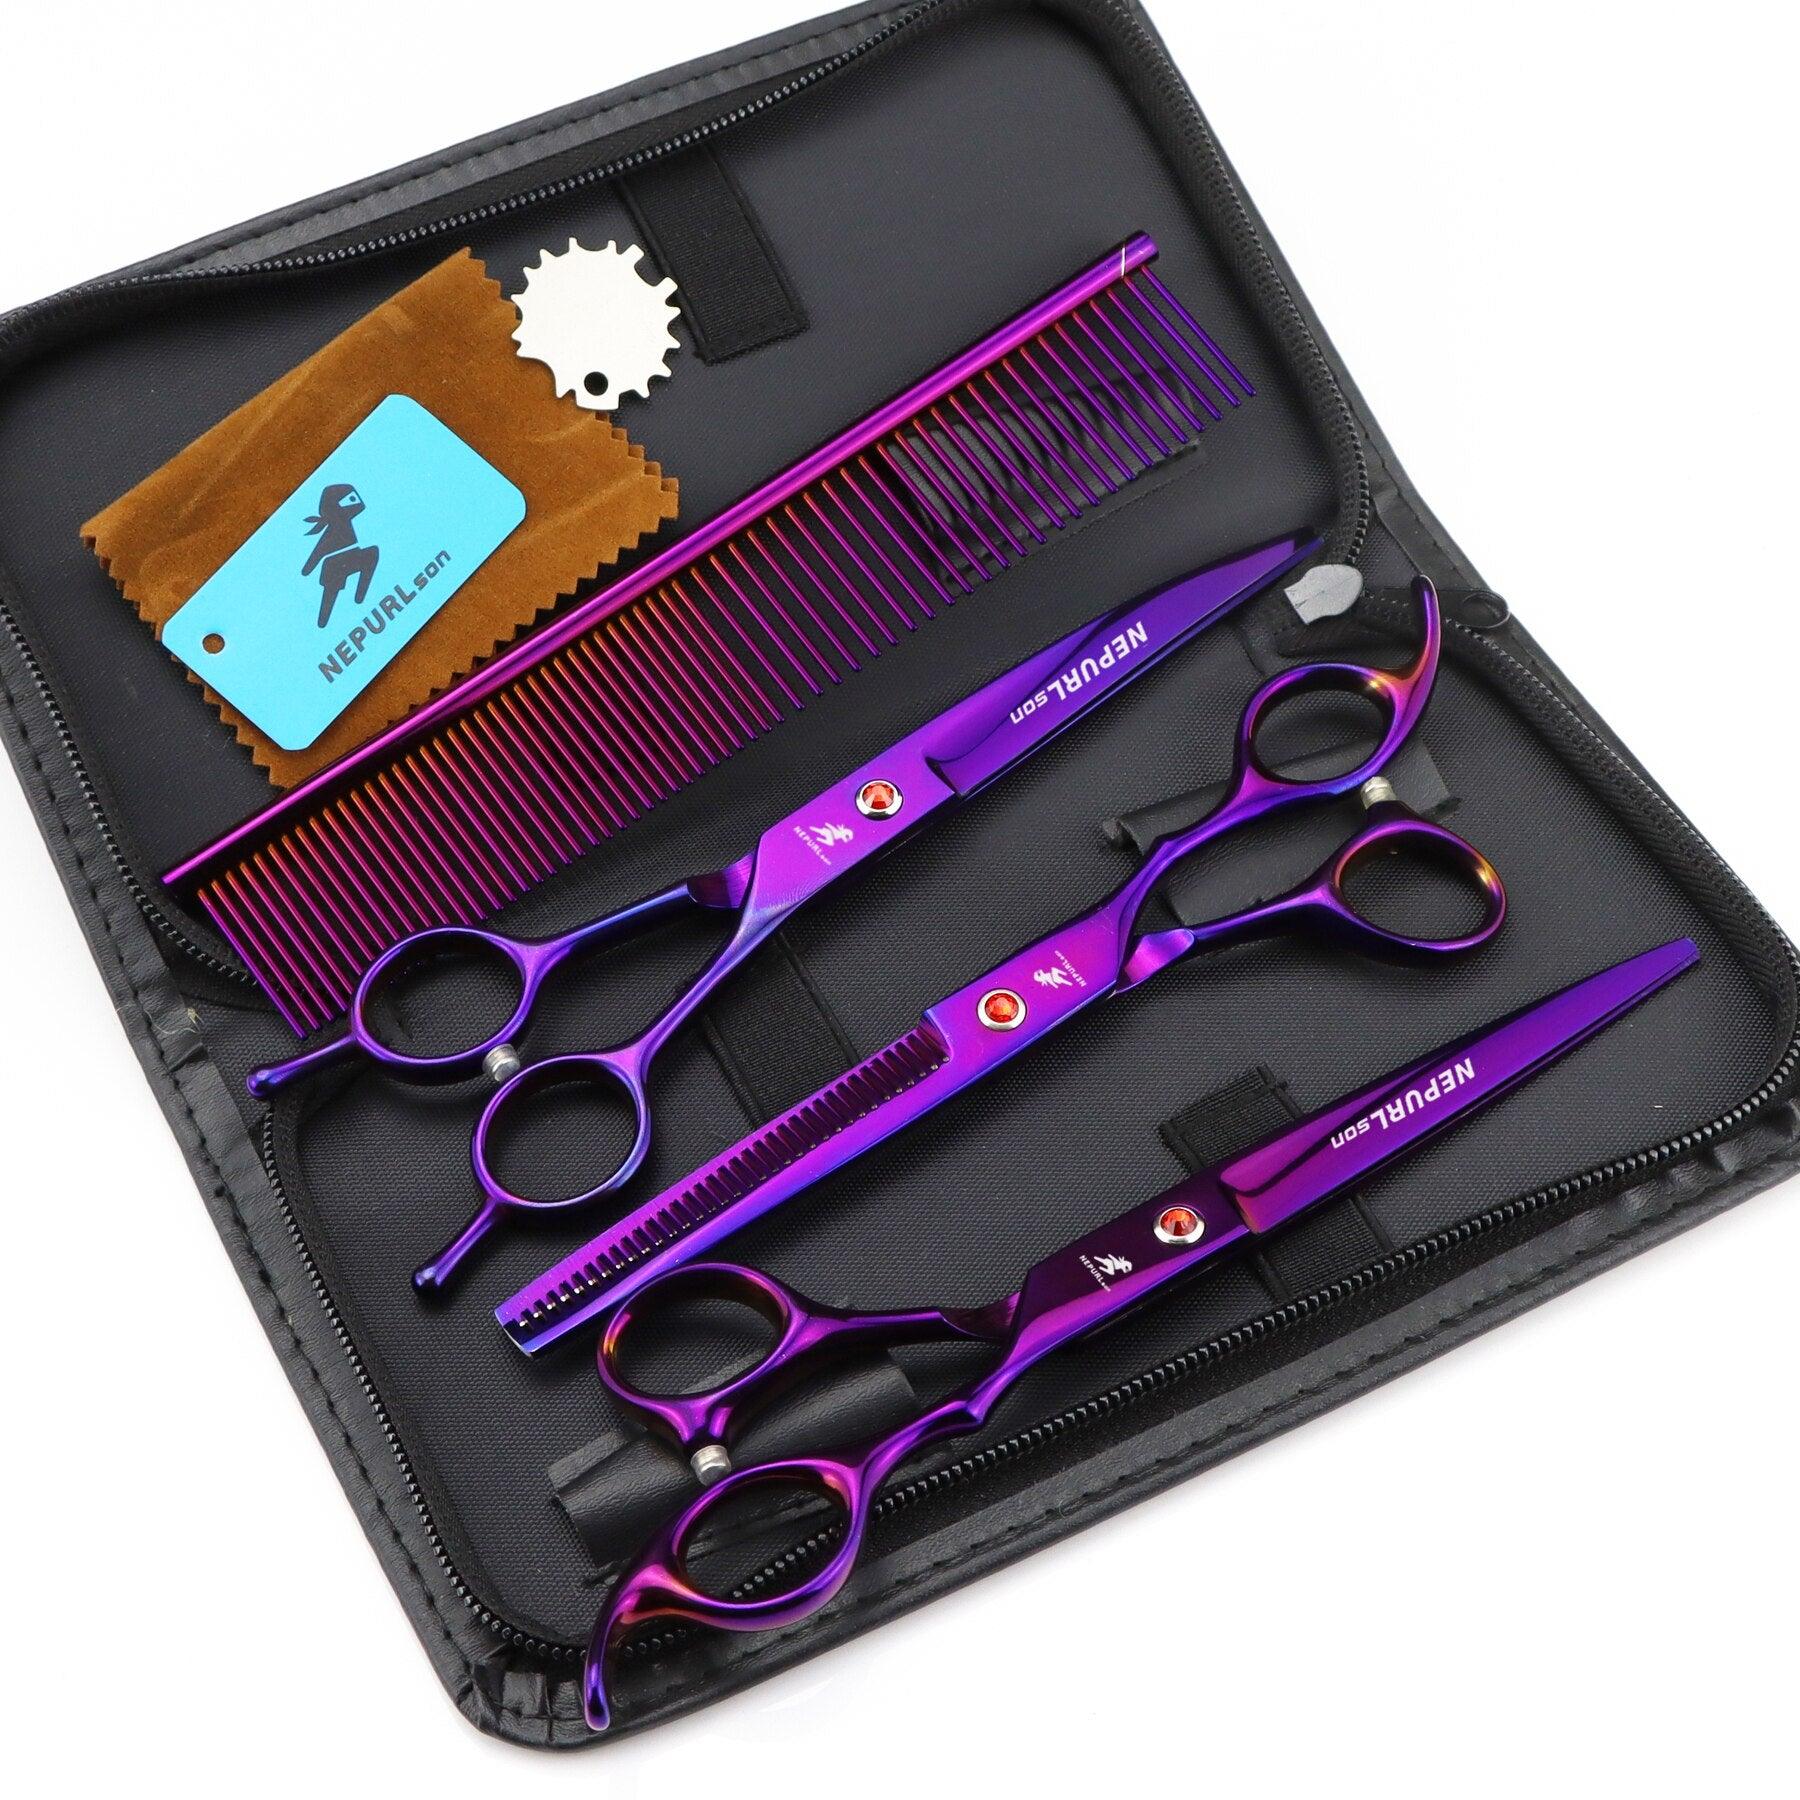 7/8.0 inch Pet grooming scissors set straight cut teeth cut fish bone scissors prt grooming